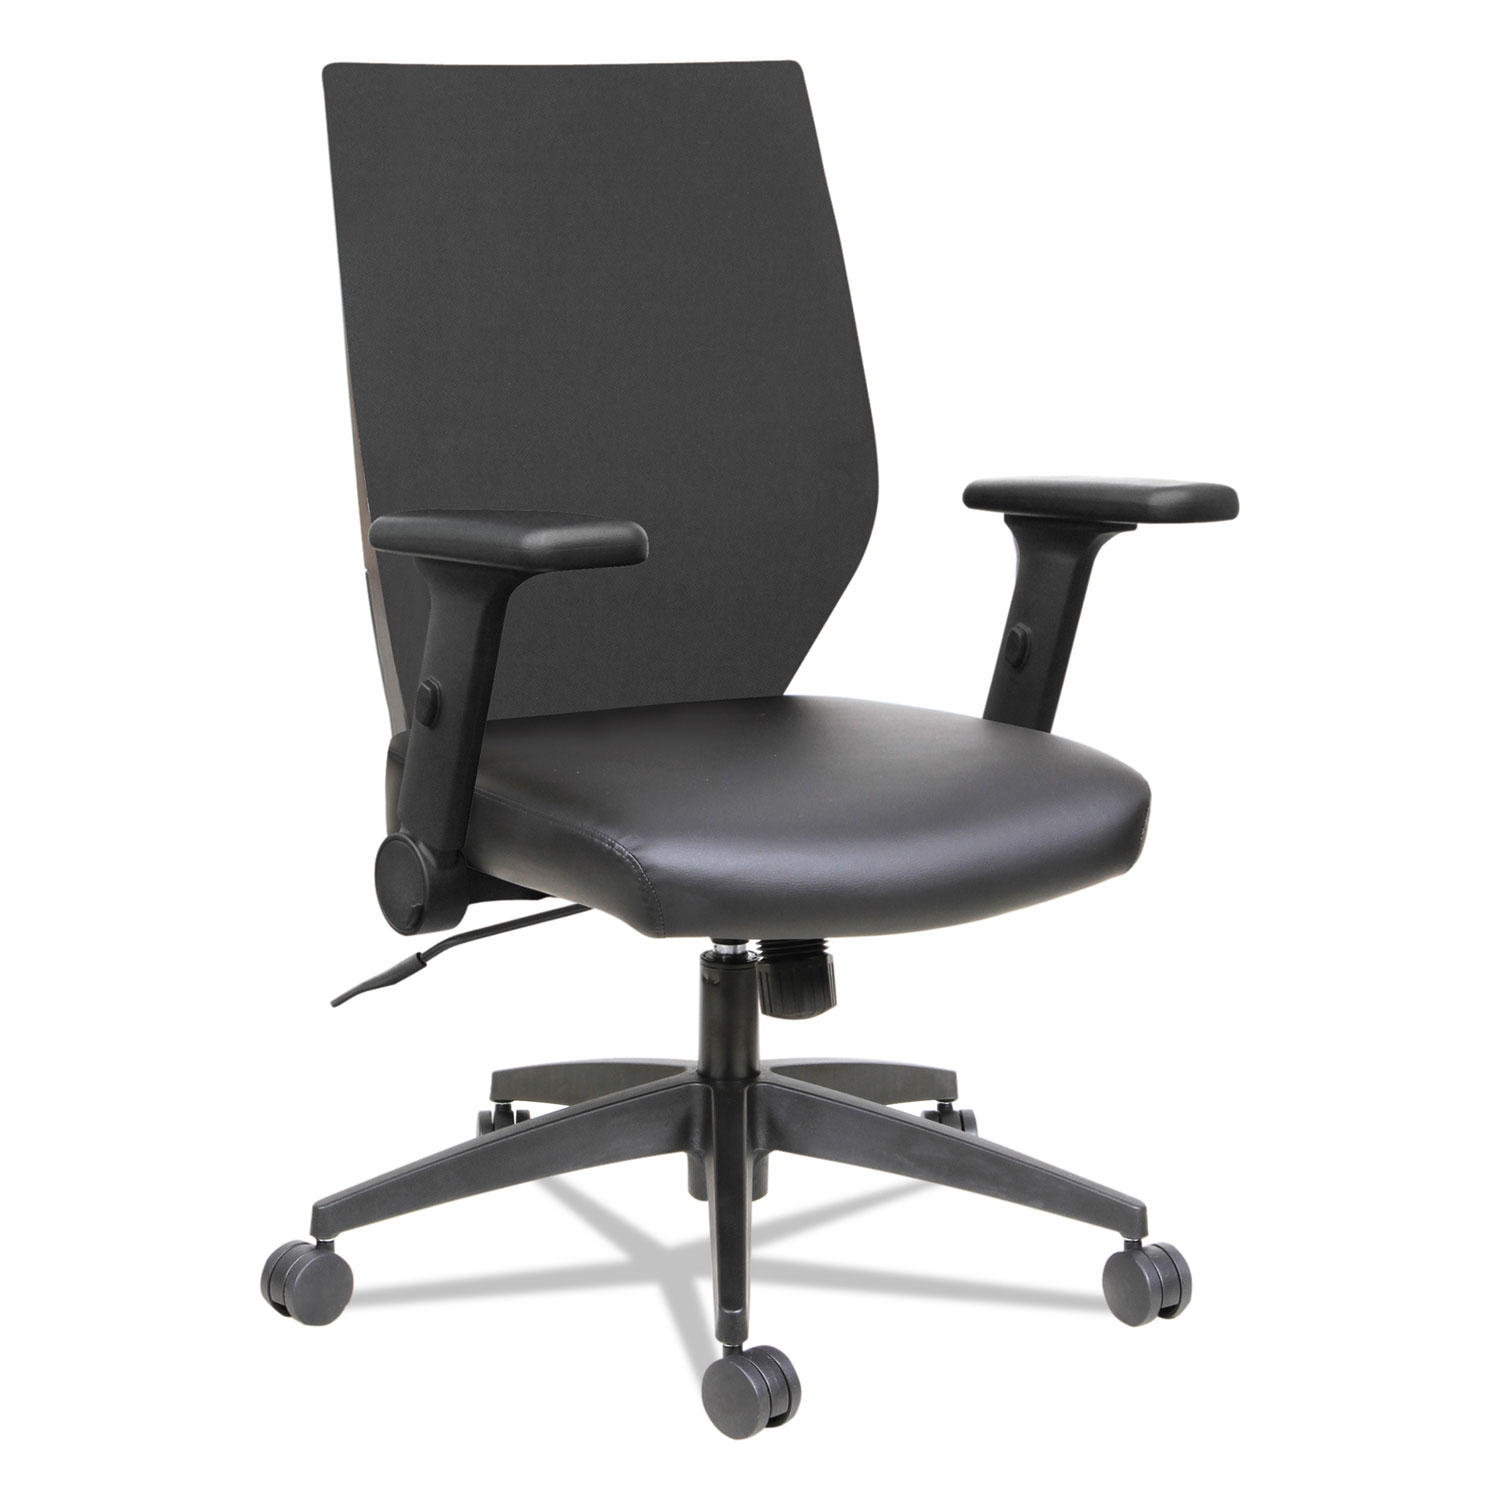  Alera ALEEBT4215 Alera EB-T Series Synchro Mid-Back Flip-Arm Chair, Supports up to 275 lbs., Black Seat/Black Back, Black Base (ALEEBT4215) 